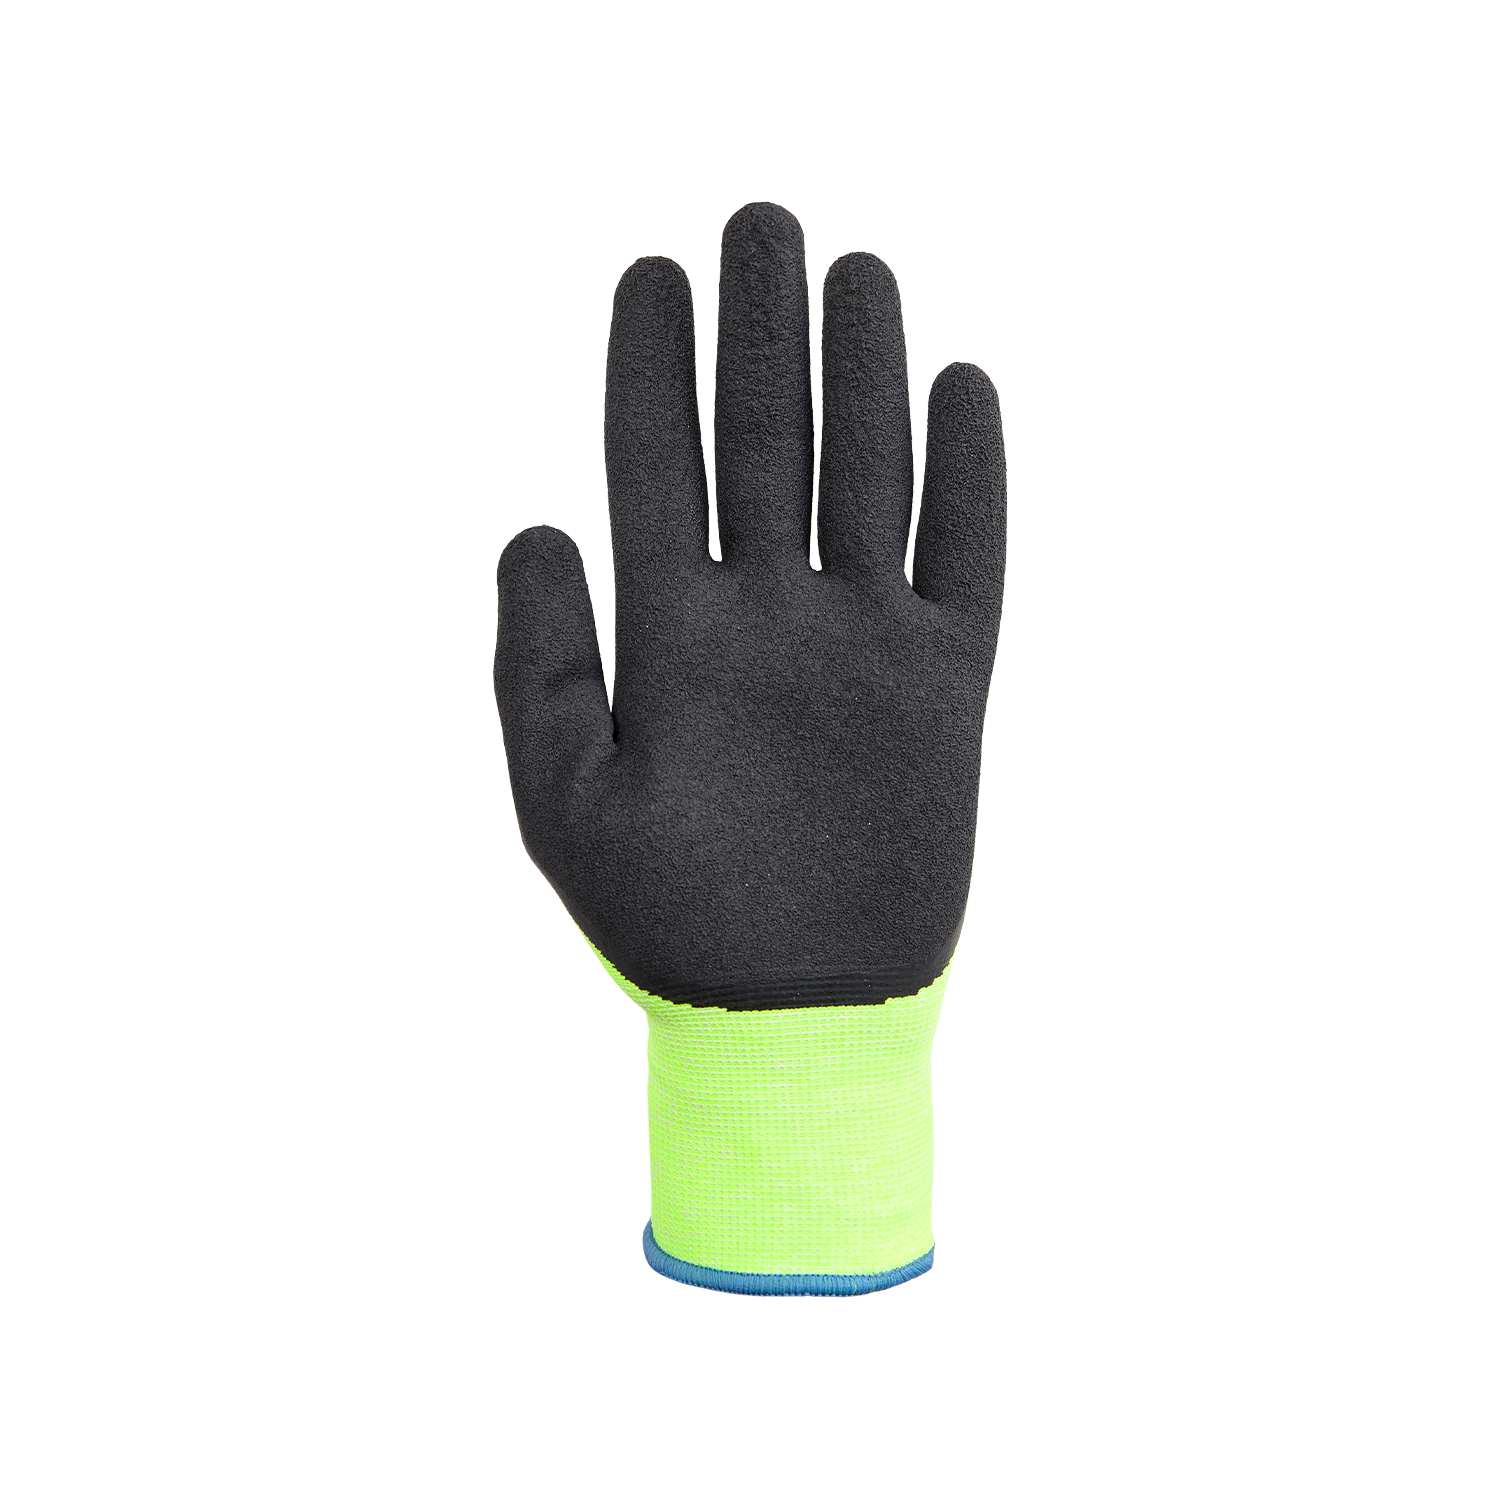 NORSE Eco Light assembly gloves size 11